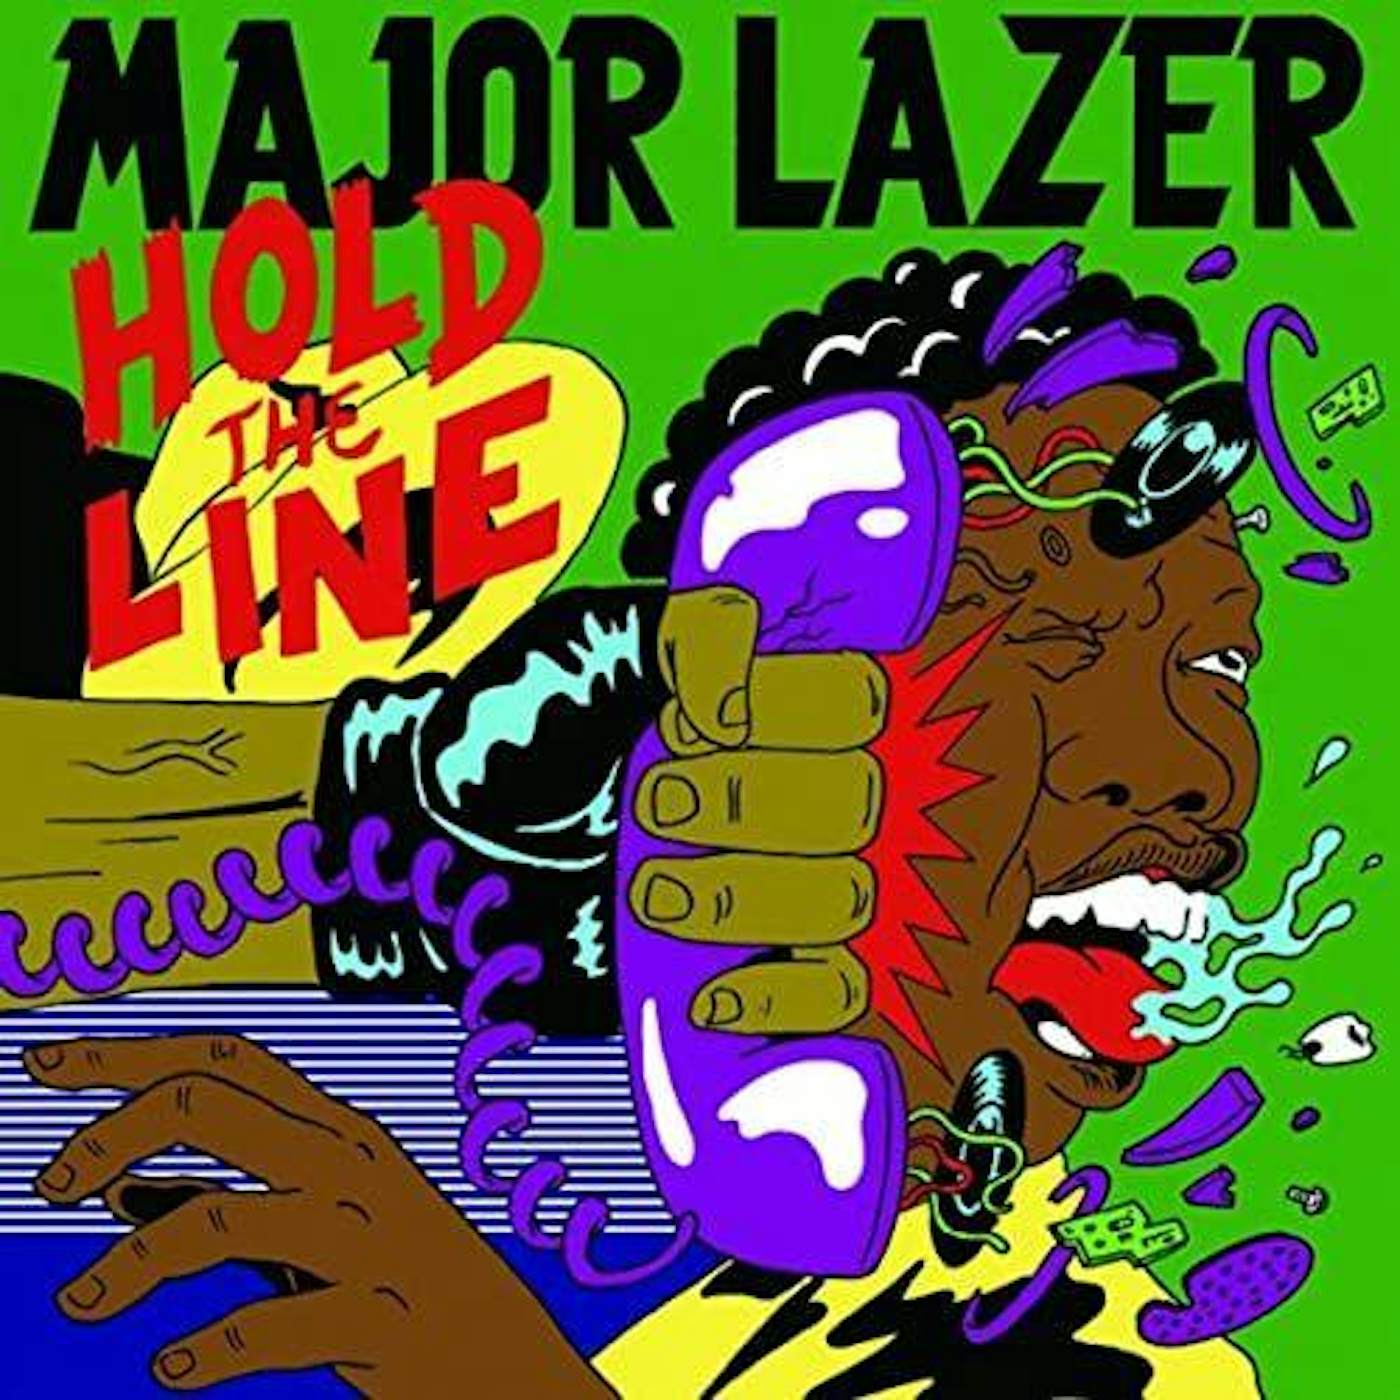 Major lazer remix. Major Lazer обложка. Major Lazer hold the line. Major Lazer обложки альбомов. Major Lazer Diplo.